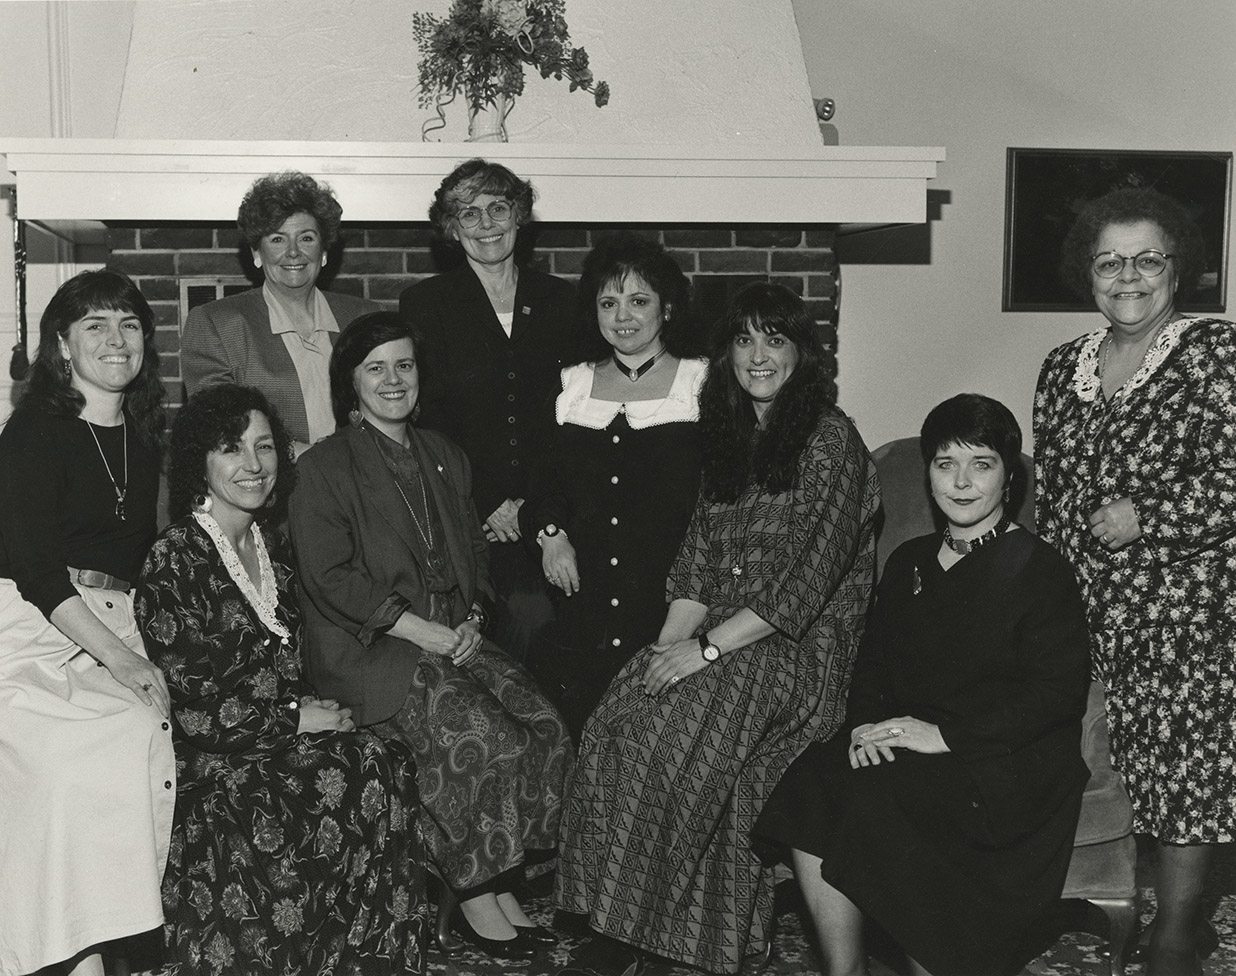 communityalbums - Nova Scotia Advisory Council on the Status of Women Council Members with Minister Responsible for the Nova Scotia Advisory Council on the Status of Women Act and Regulations, April 1994